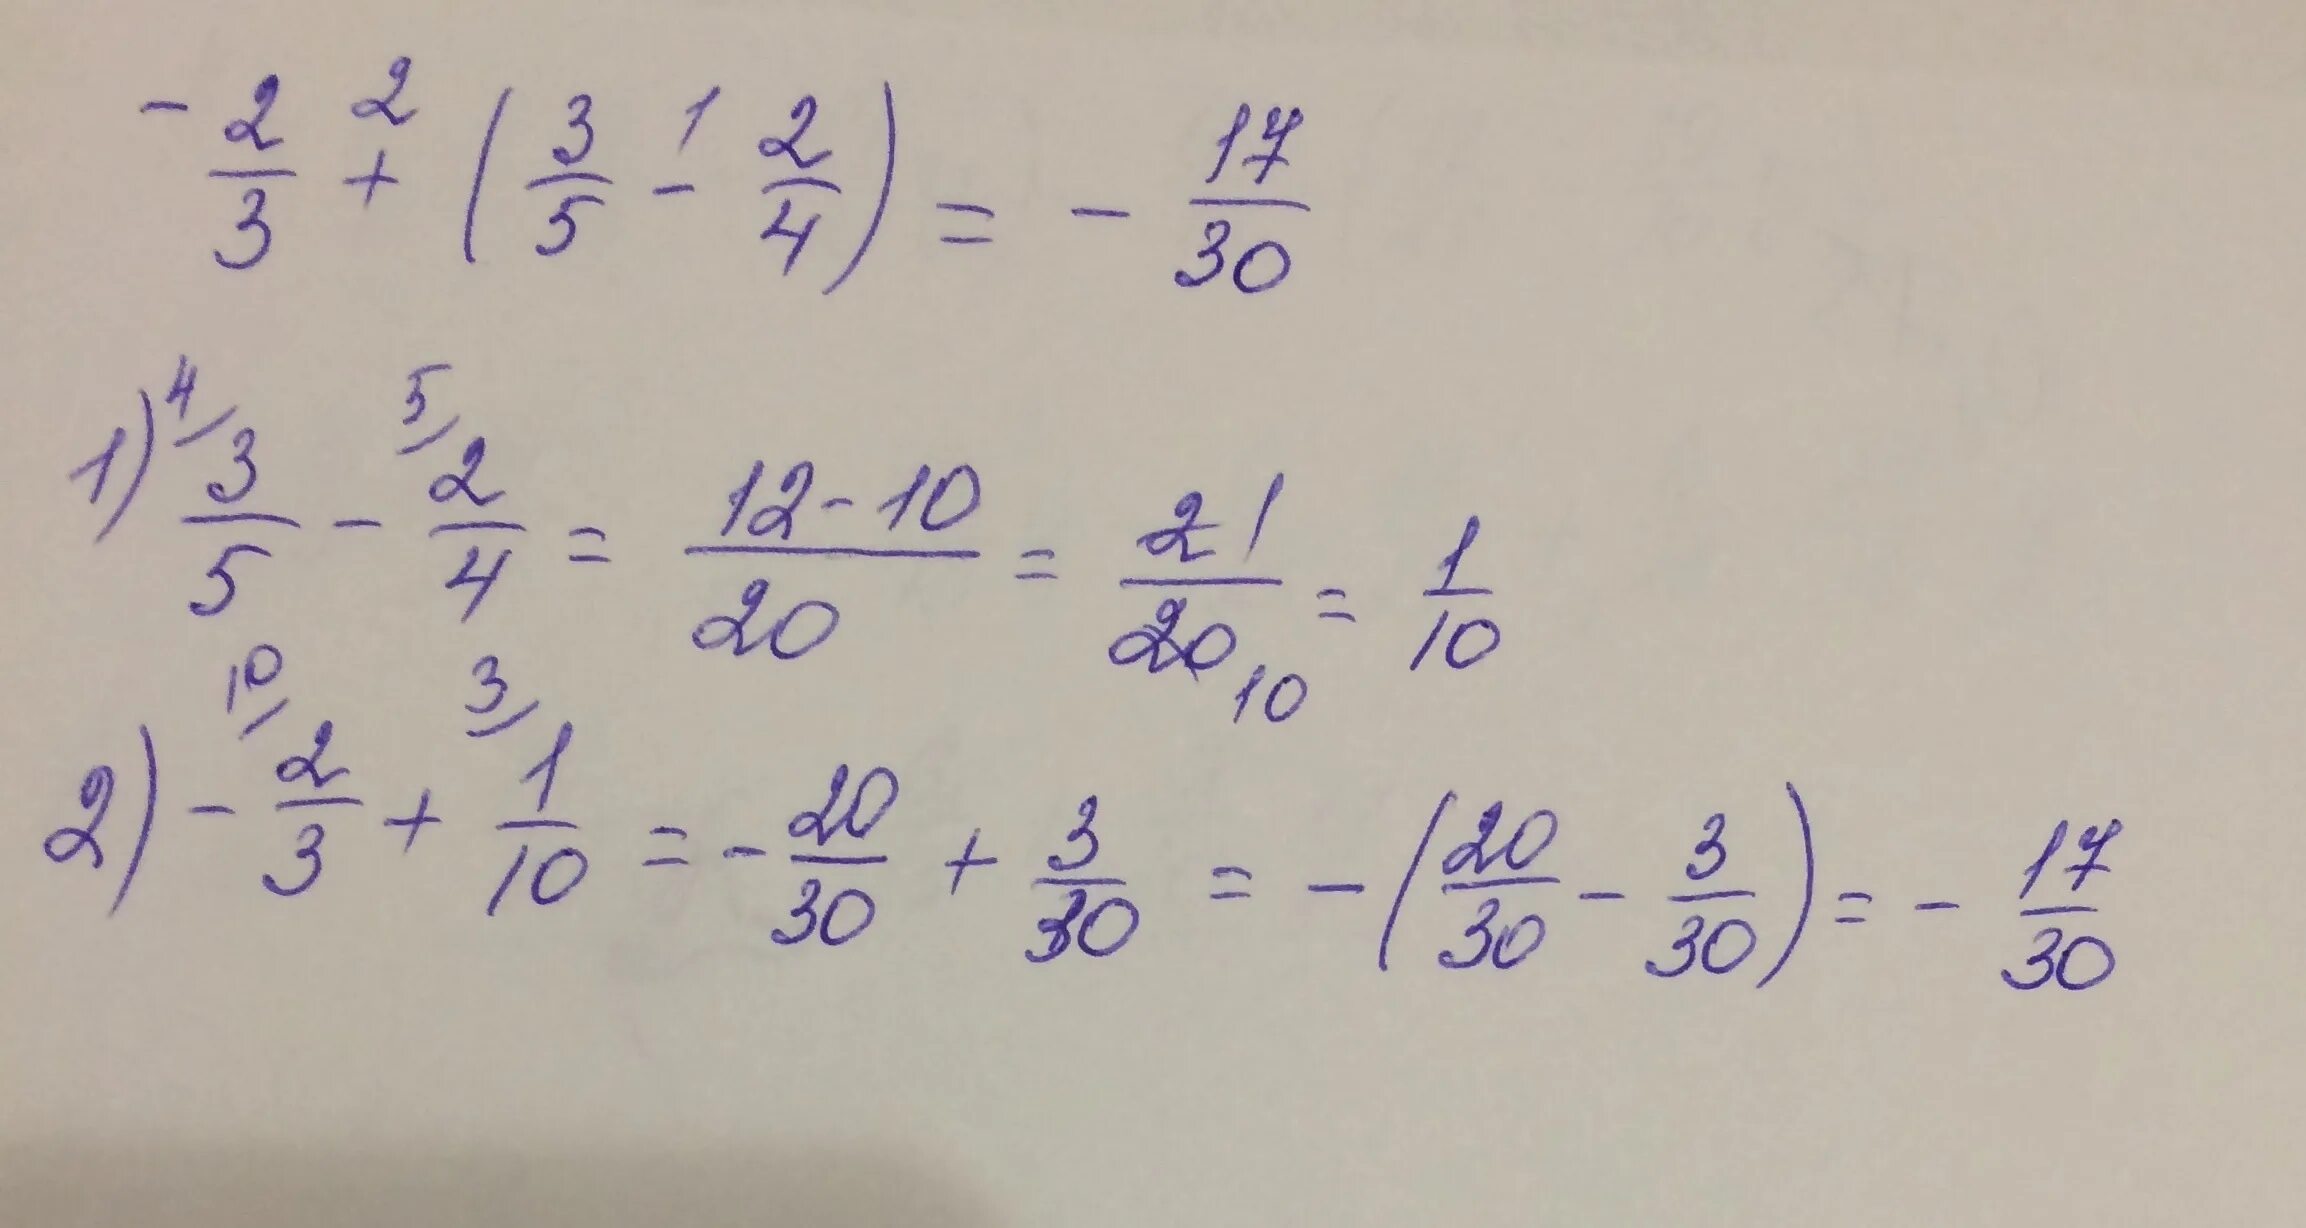 1.3 5.0. А3 и а3+. 3+ 2/3. 3+(-2). (A-2)³+(A+2)³.